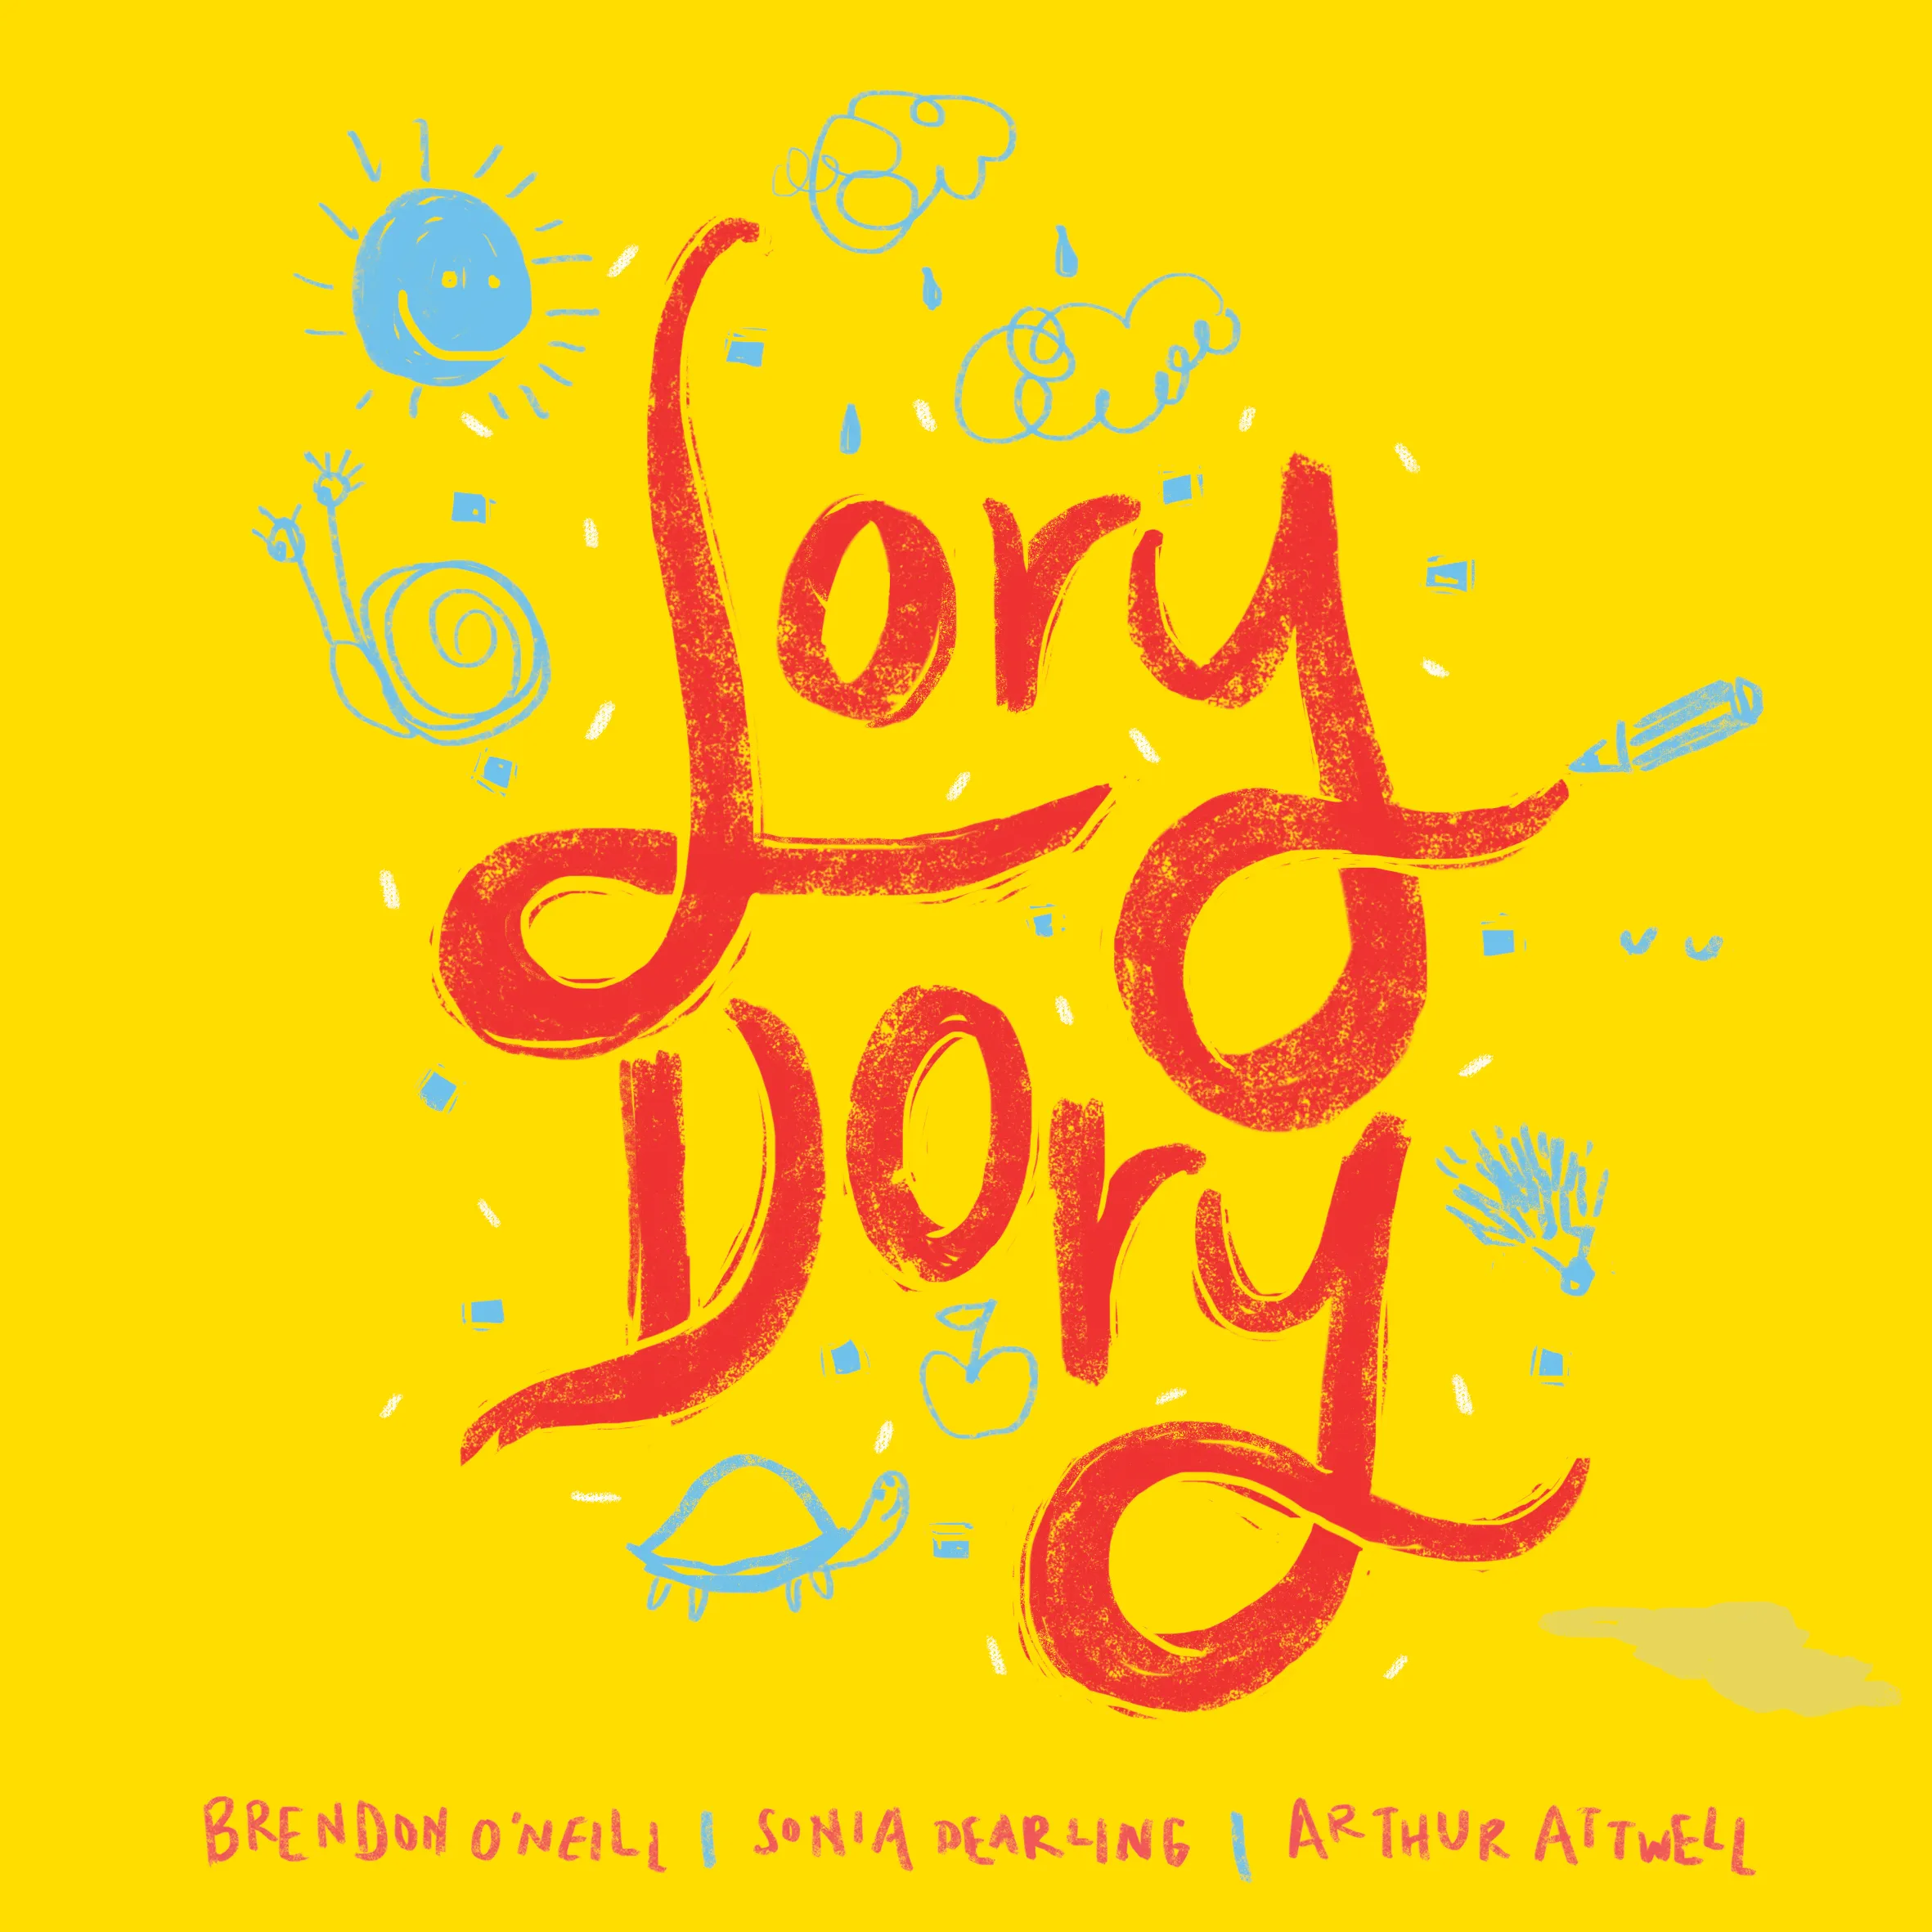 Lory Dory